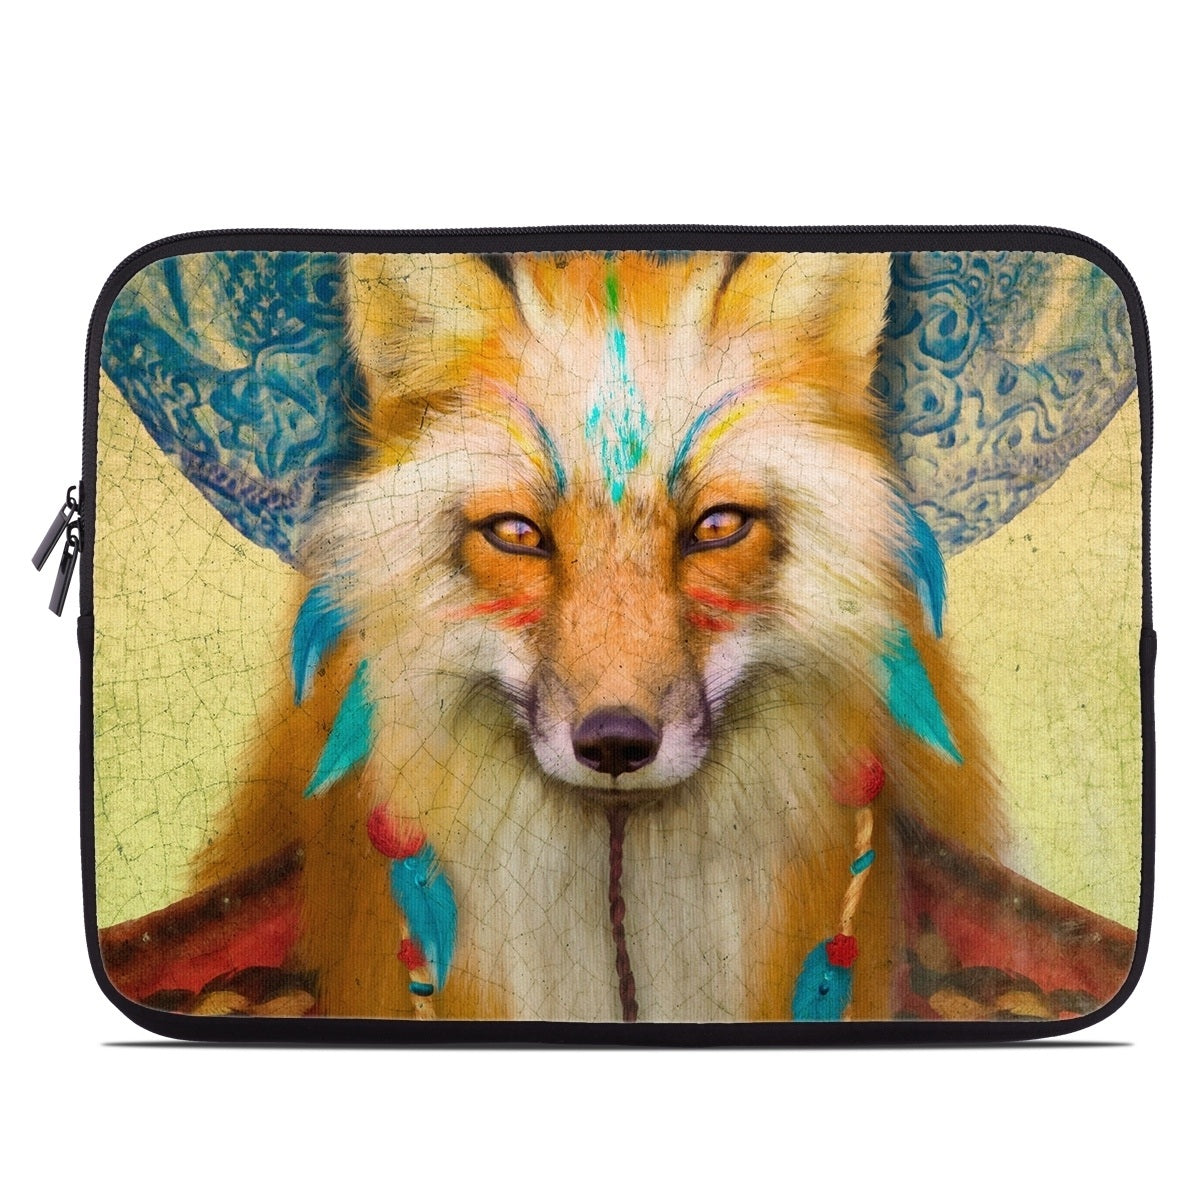 Wise Fox - Laptop Sleeve